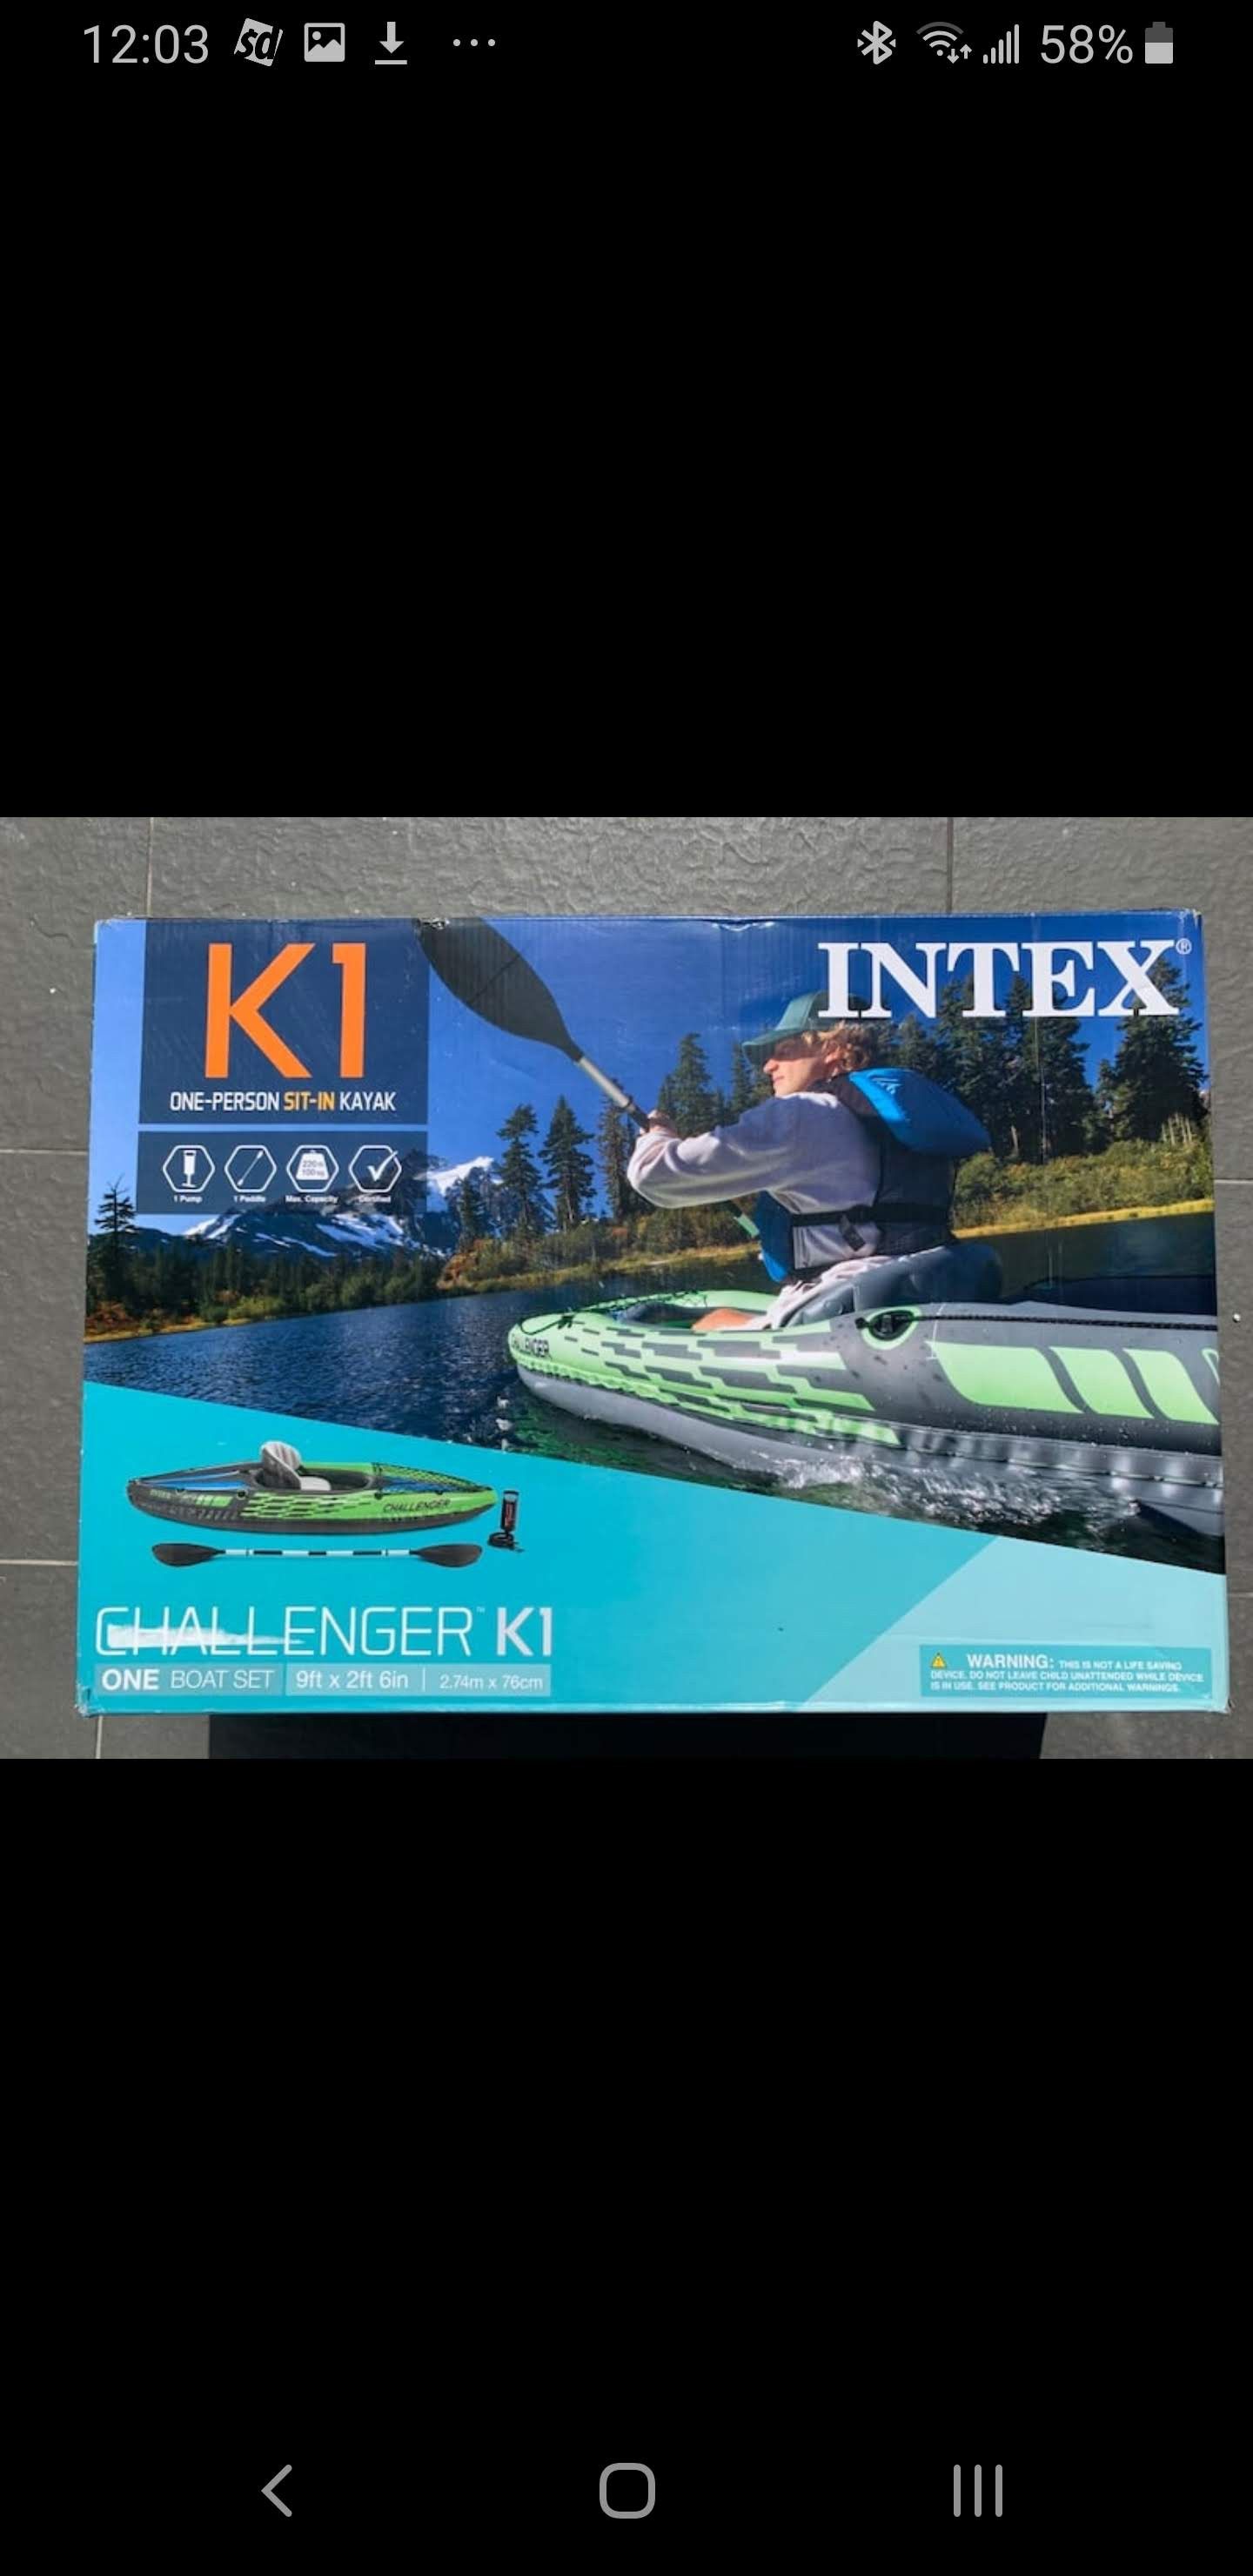 K1 Kayak multiple in hand